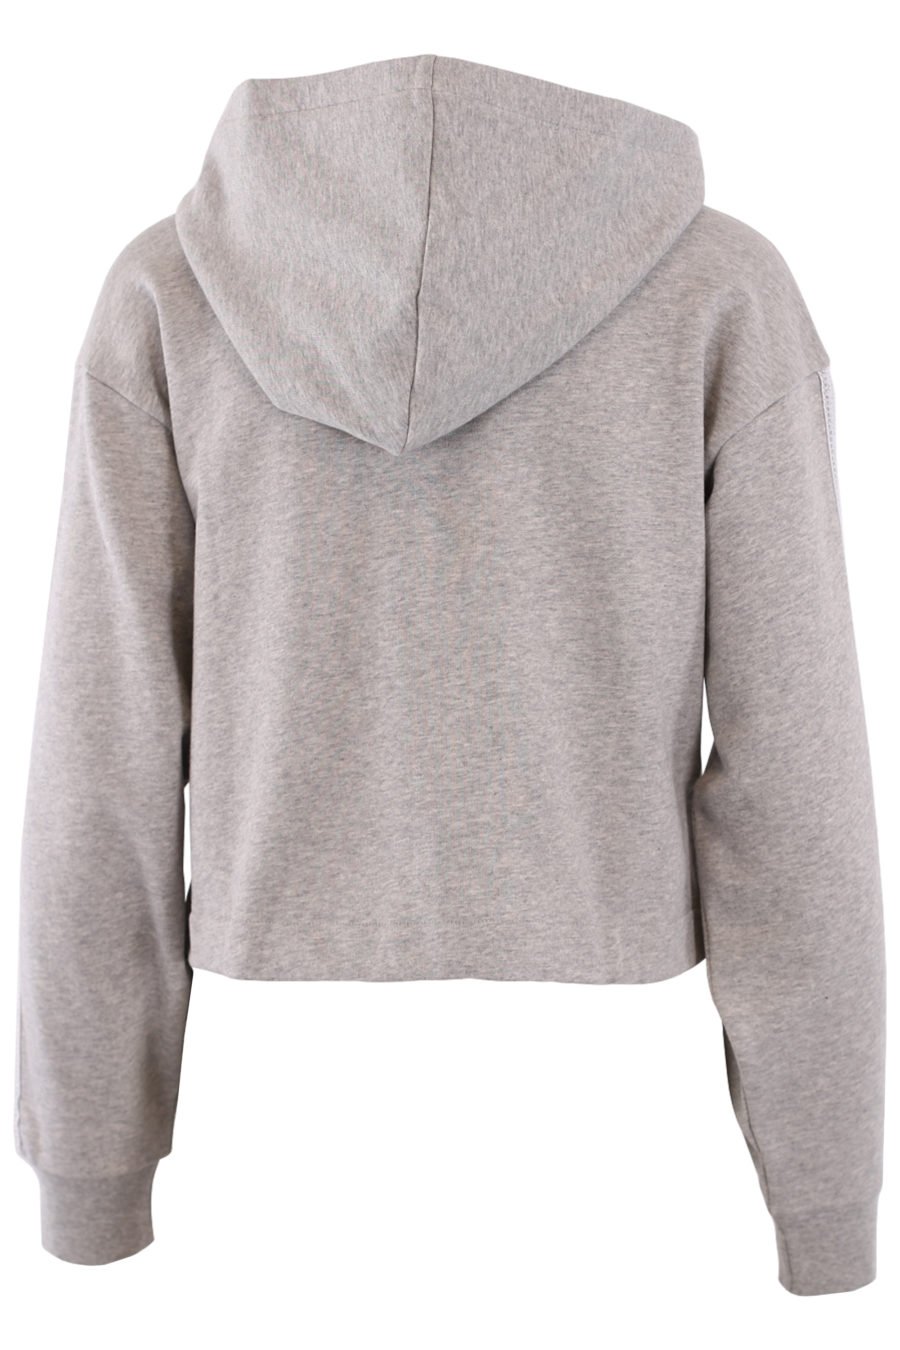 Grey sweatshirt and hood with lace effect ribbon logo - IMG 9008